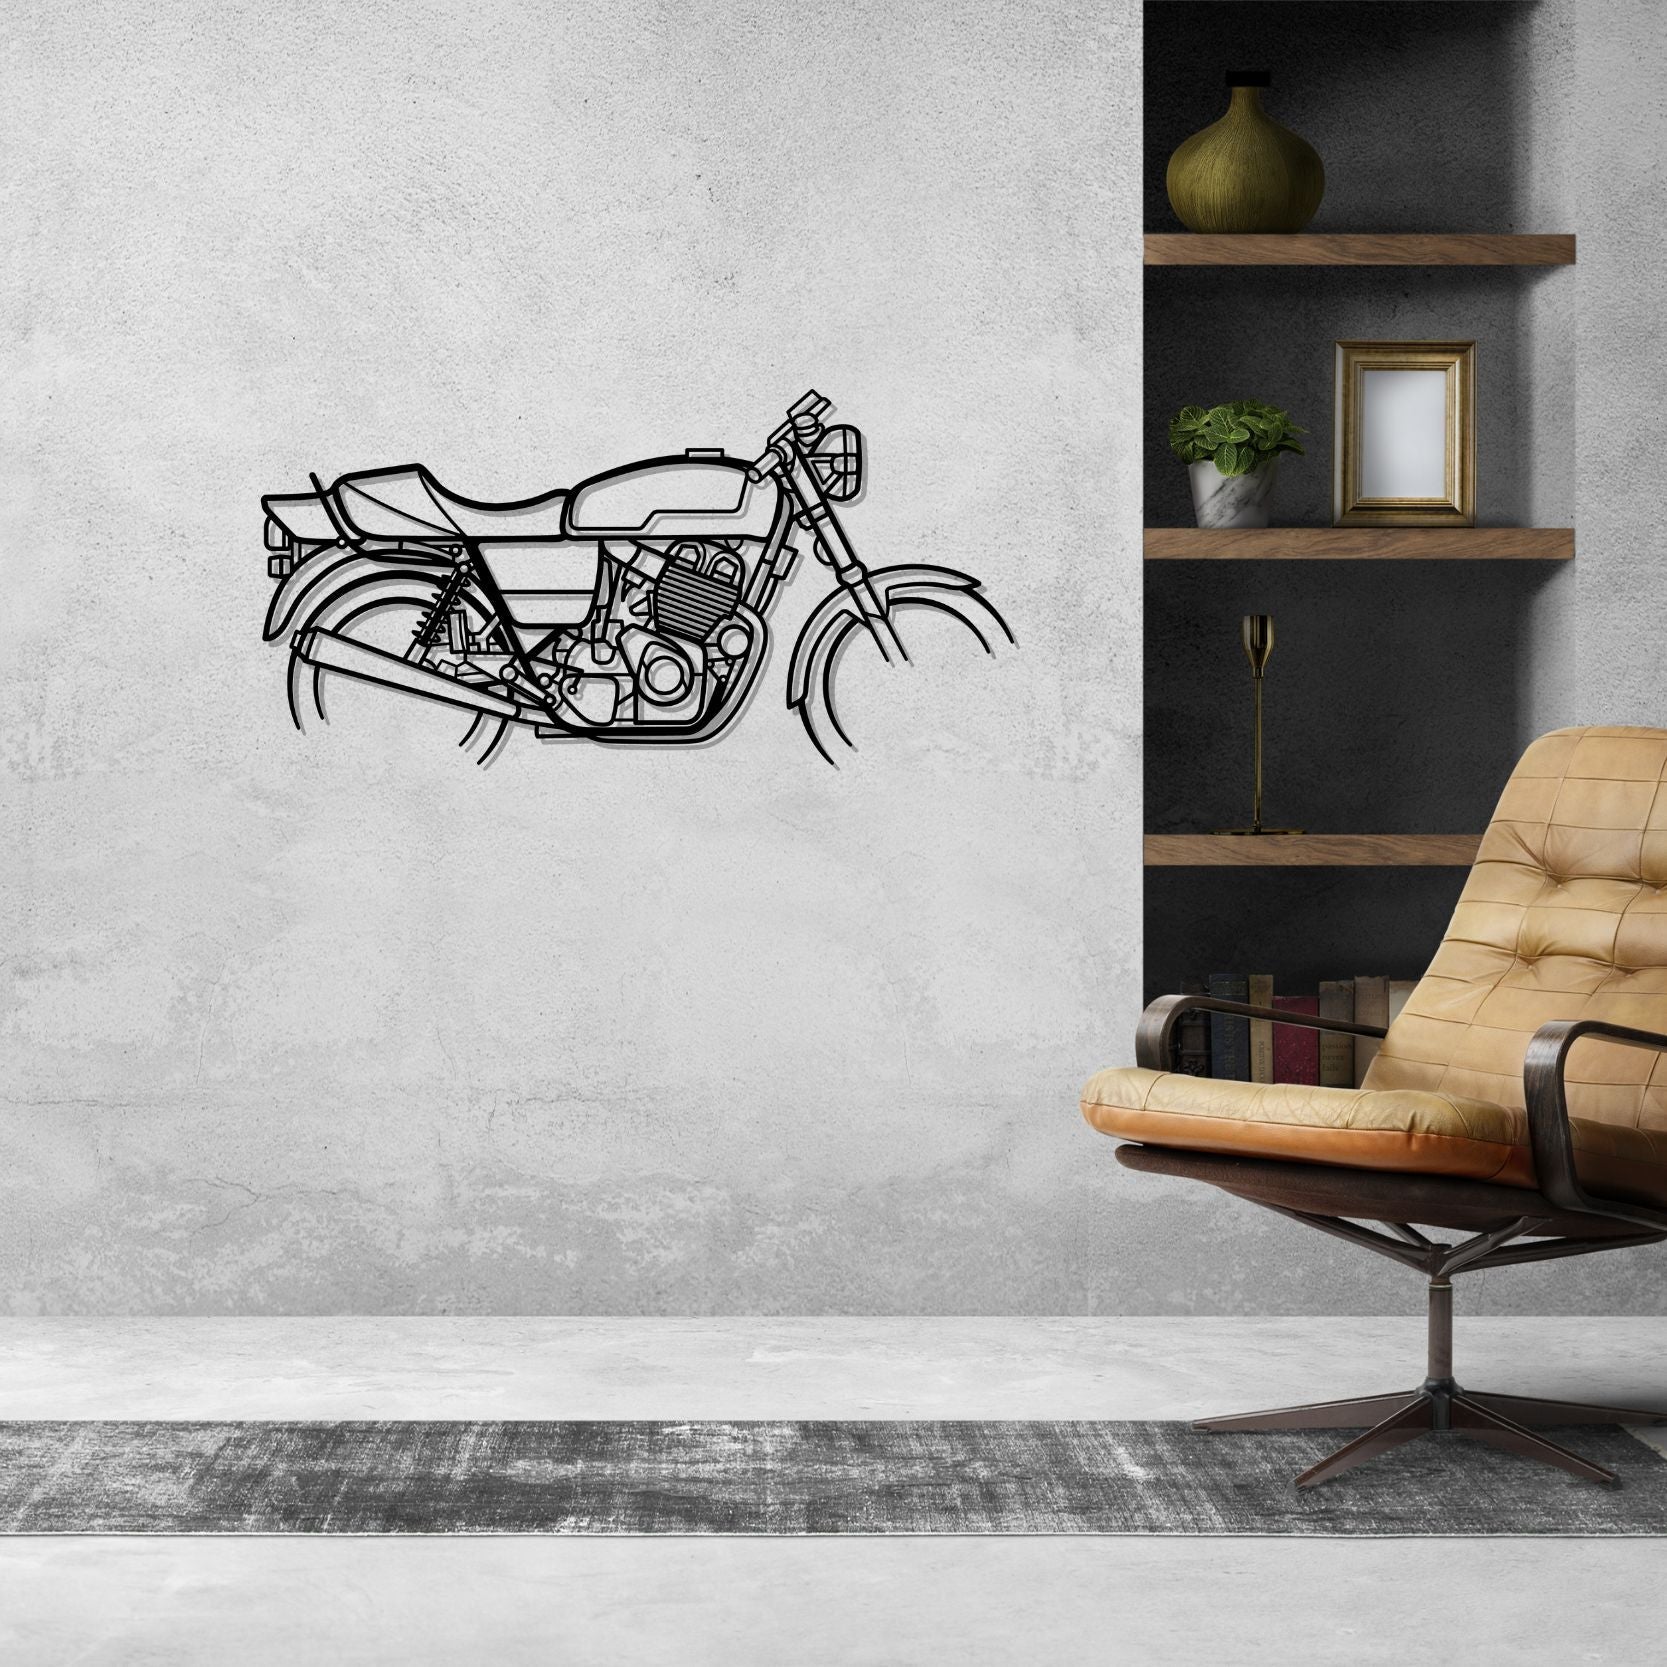 Metal Wall Art Motorcycle - Metal Motorcycle Signs - Metal Signs For Garage - Garage Decorations